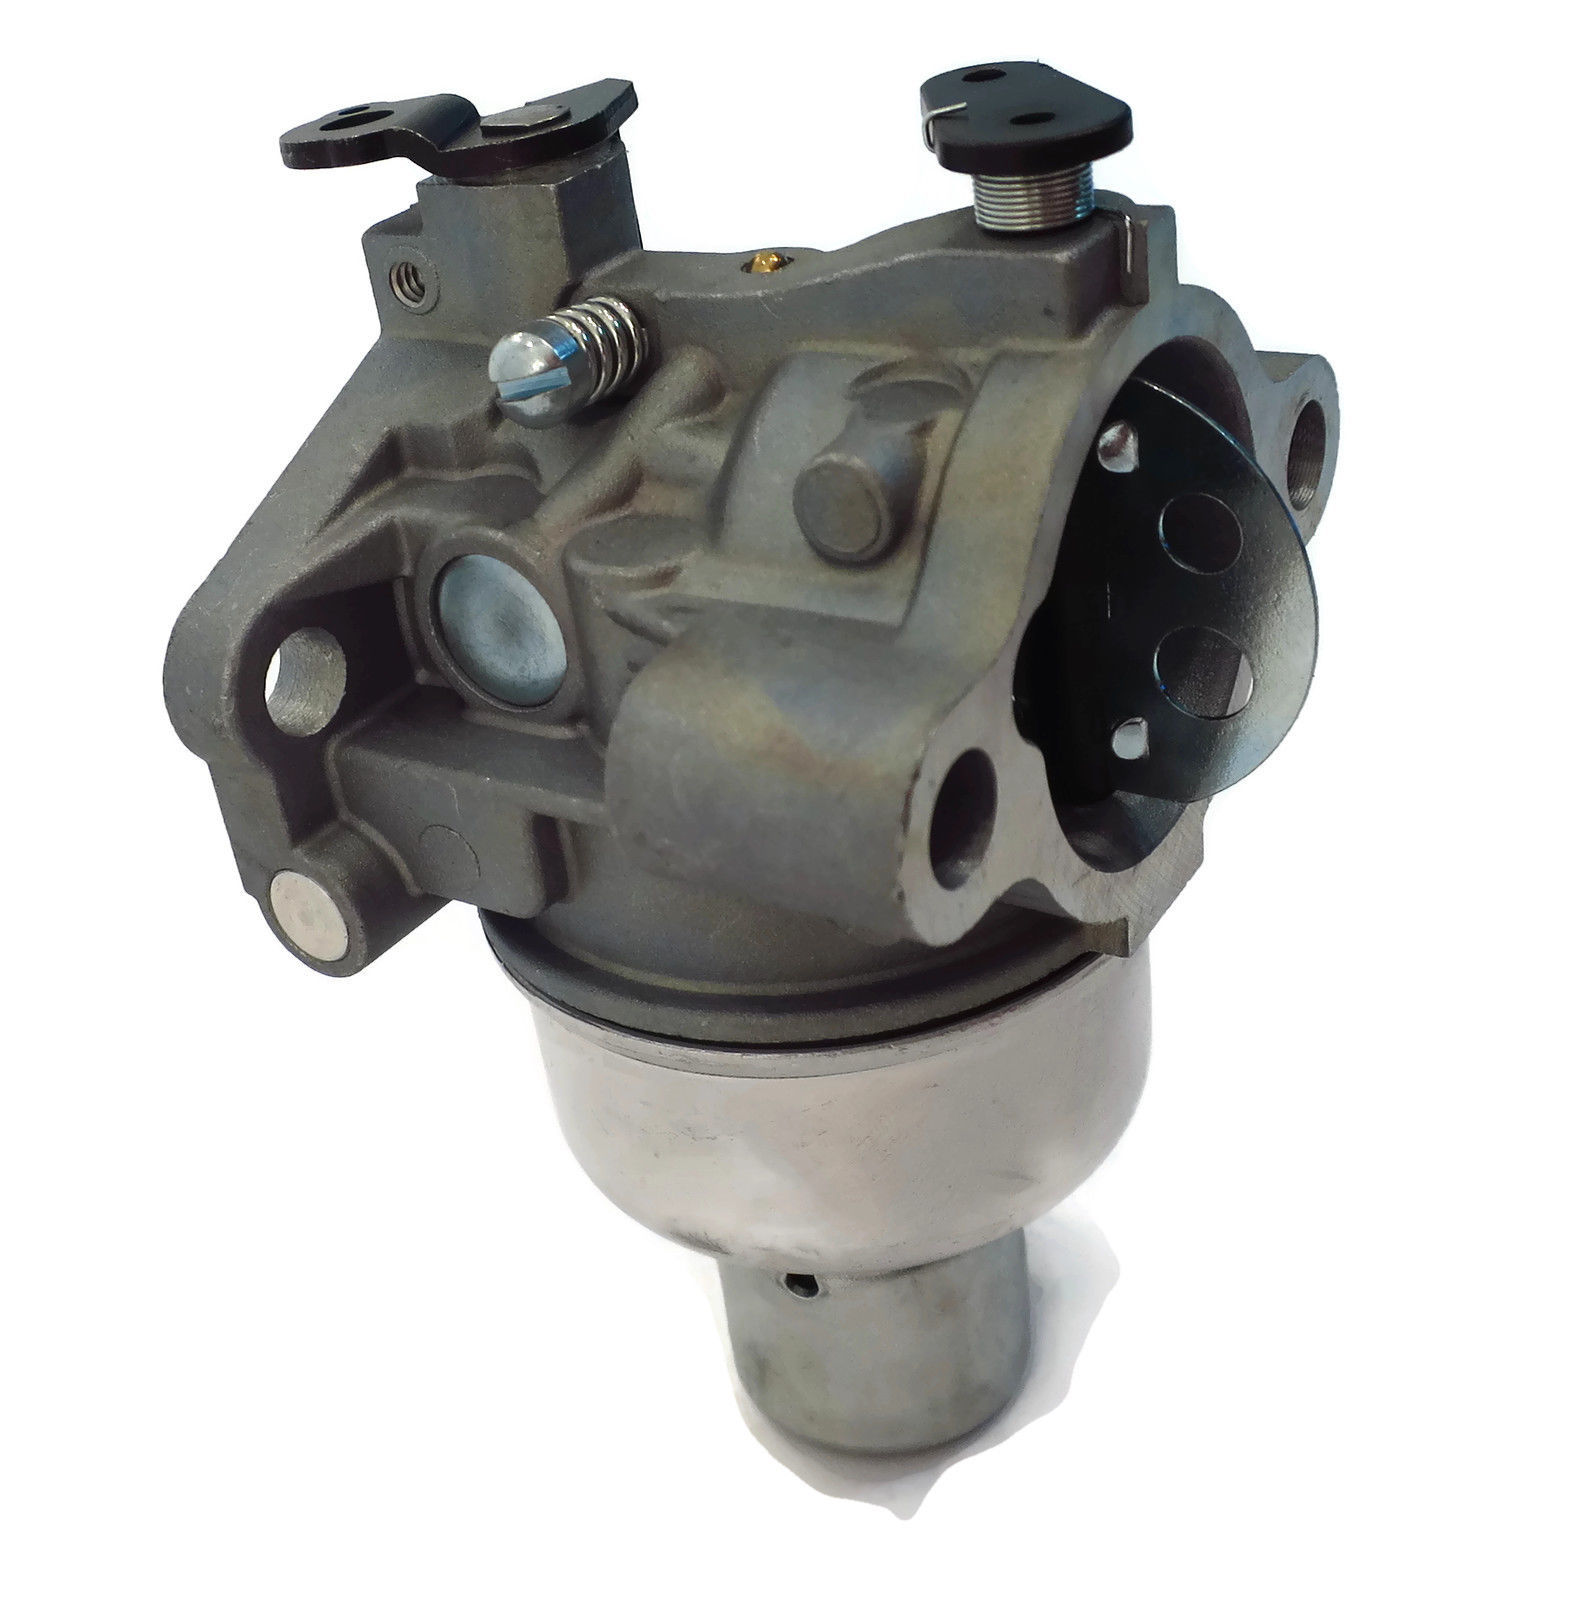 Primary image for Replaces Kohler Command 16.5 OHV Engine Carburetor